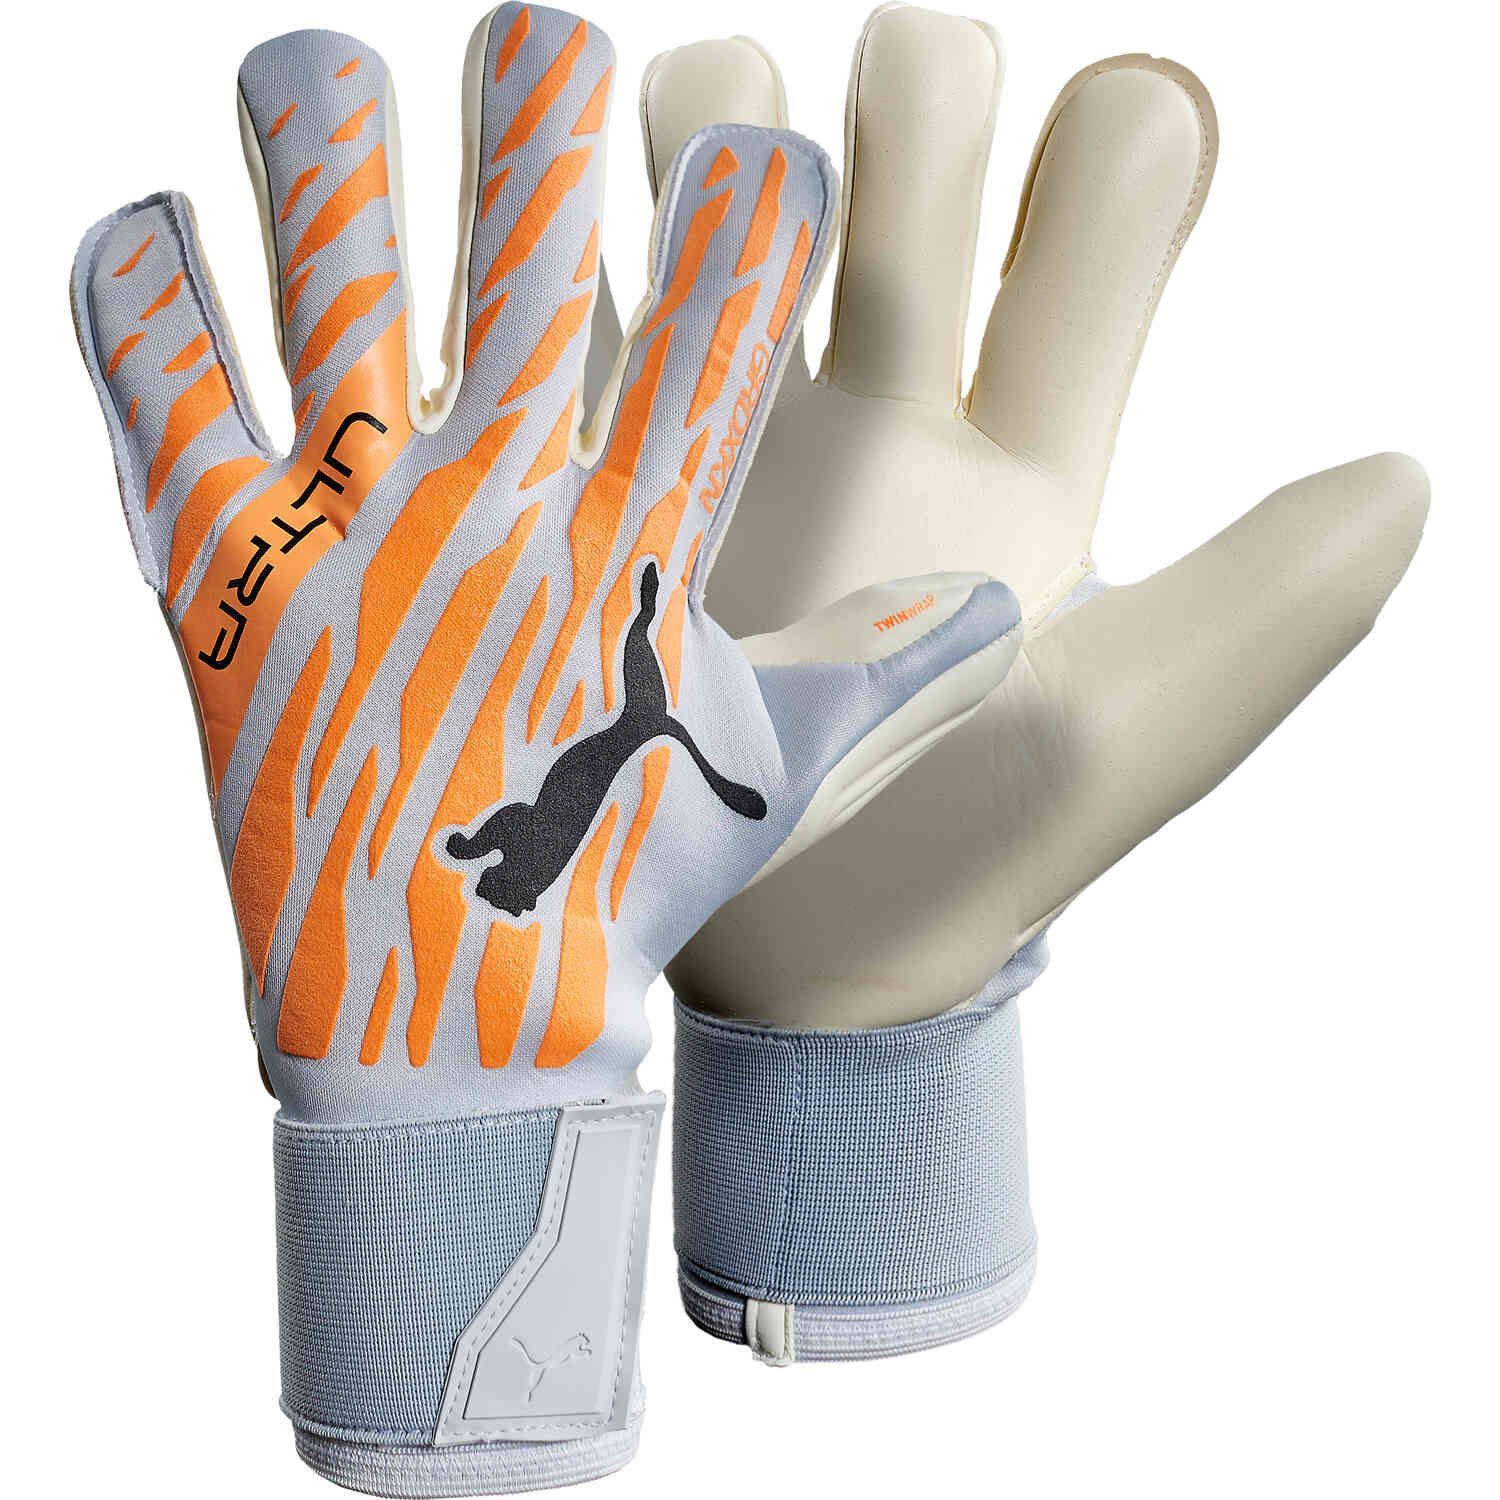 PUMA Ultra Grip 1 Goalkeeper Gloves - Live Wire, Diamond Silver Black - Soccer